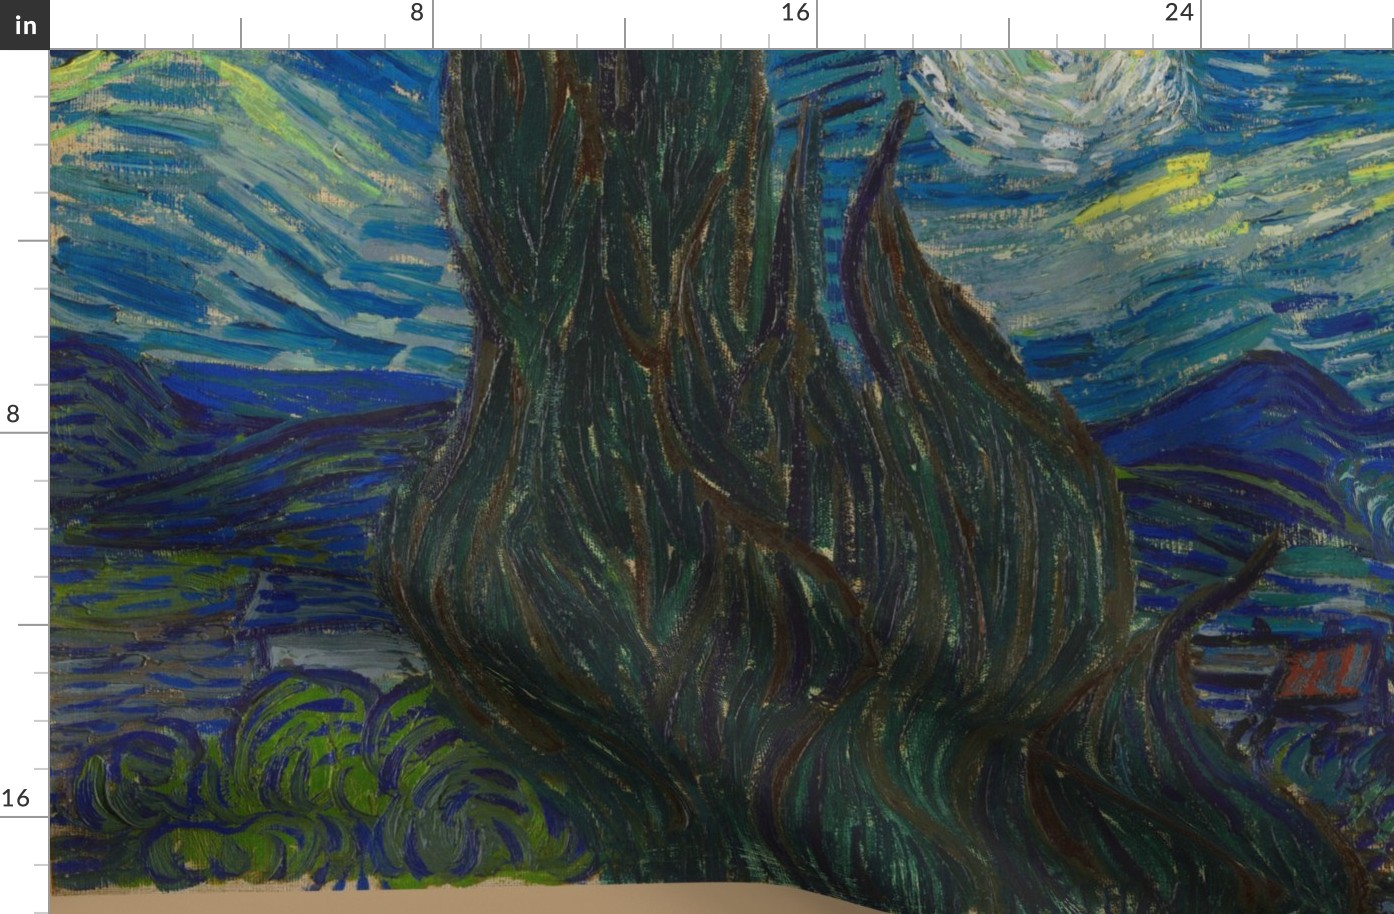 Starry Night - bright colors - 45"x56" panel